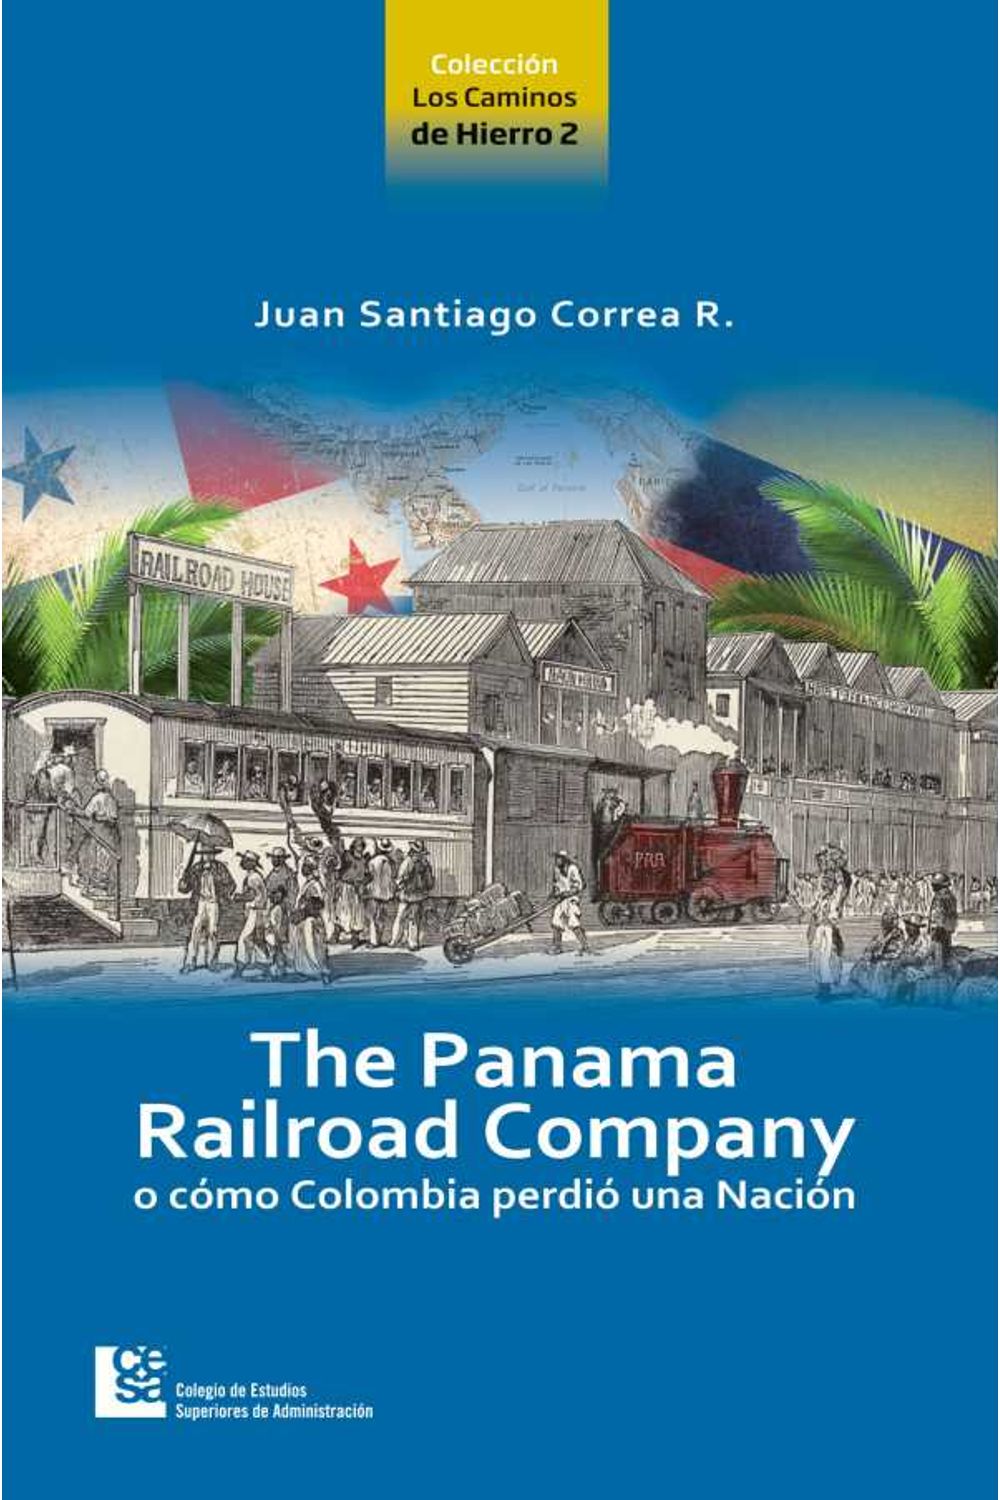 bw-the-panama-railroad-company-cesa-9789588722184